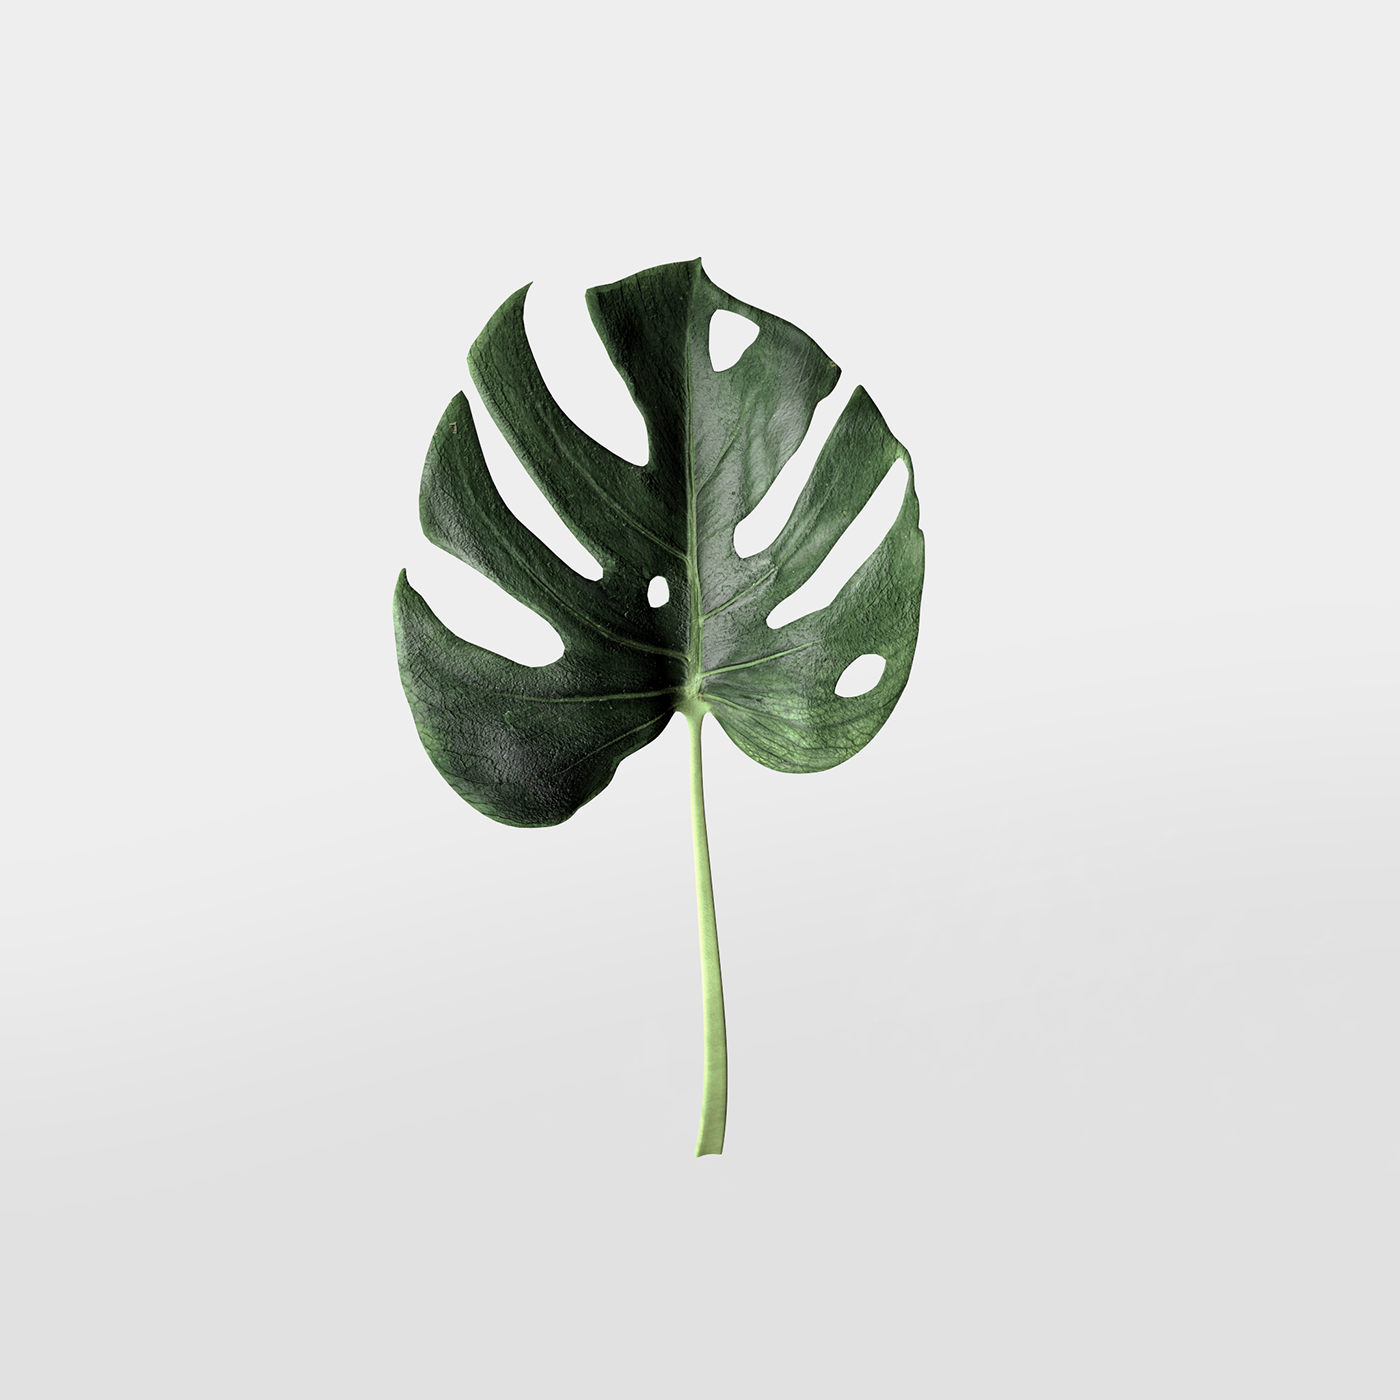 3D model Adobe InDesign Adobe Photoshop keyshot plants Render CGI greenery interior design  rendering